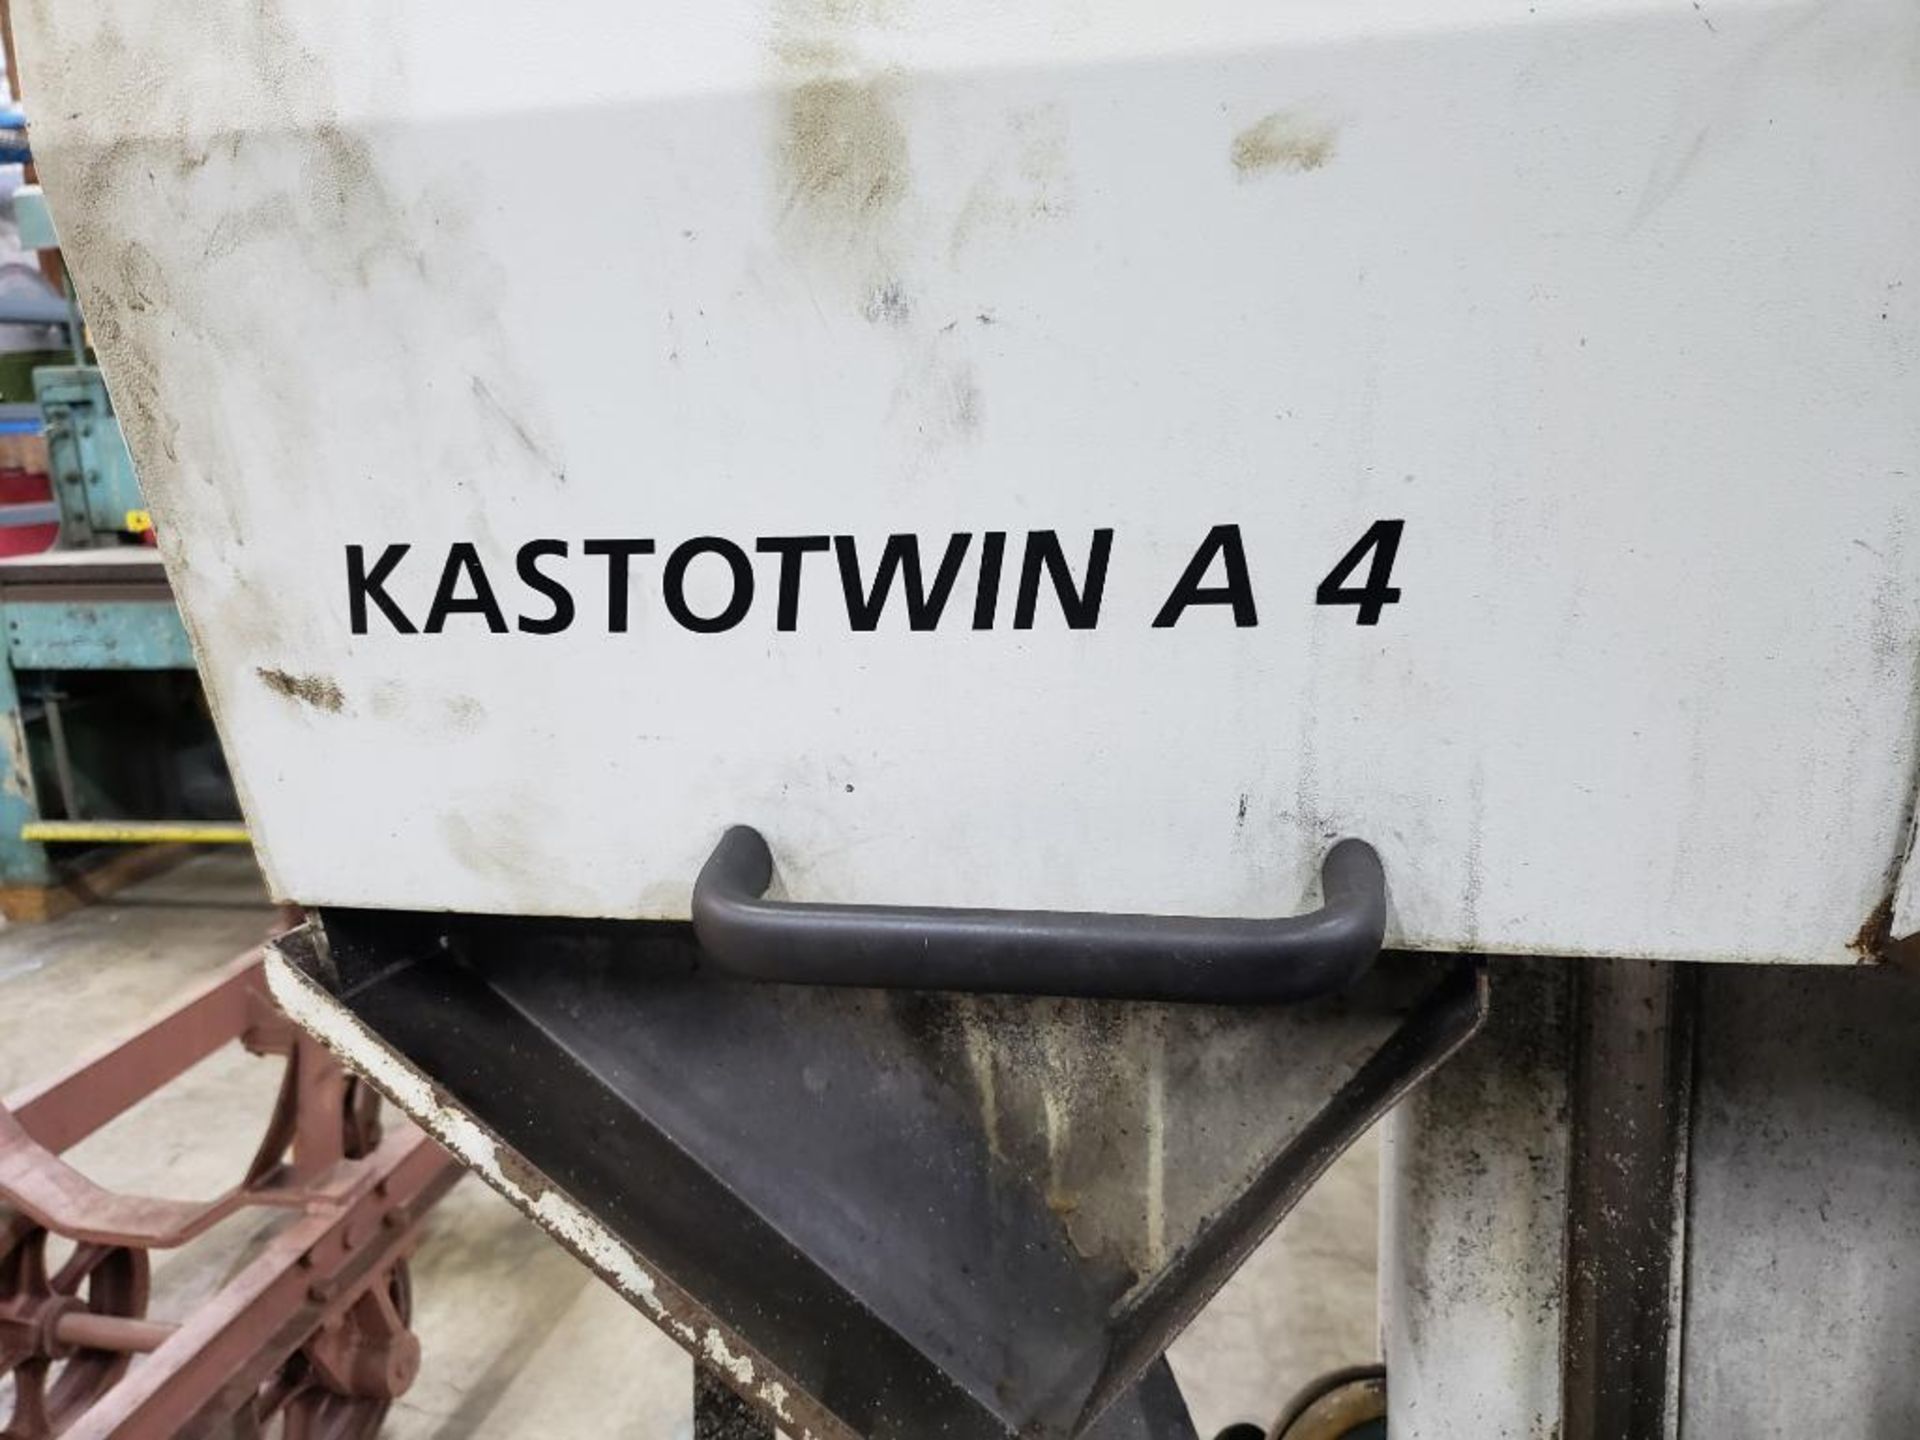 Kasto horizontal CNC band saw Model Kastotwin A4, 3 phase 440v, Mfg year 2000. Serial # 6428102047. - Image 3 of 32